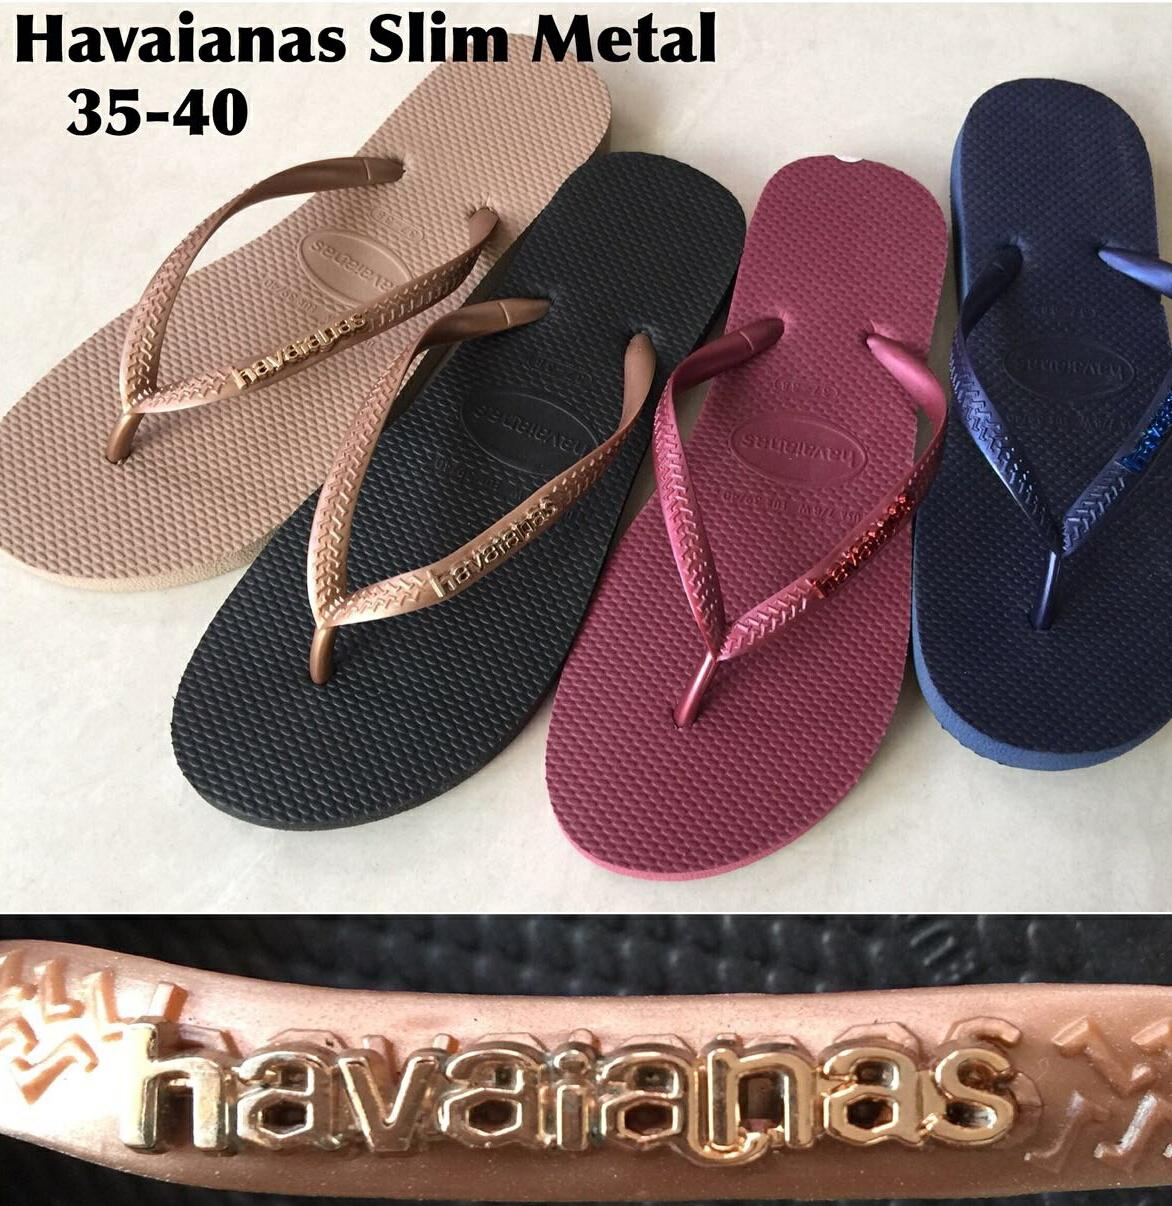 harga sandal havaianas